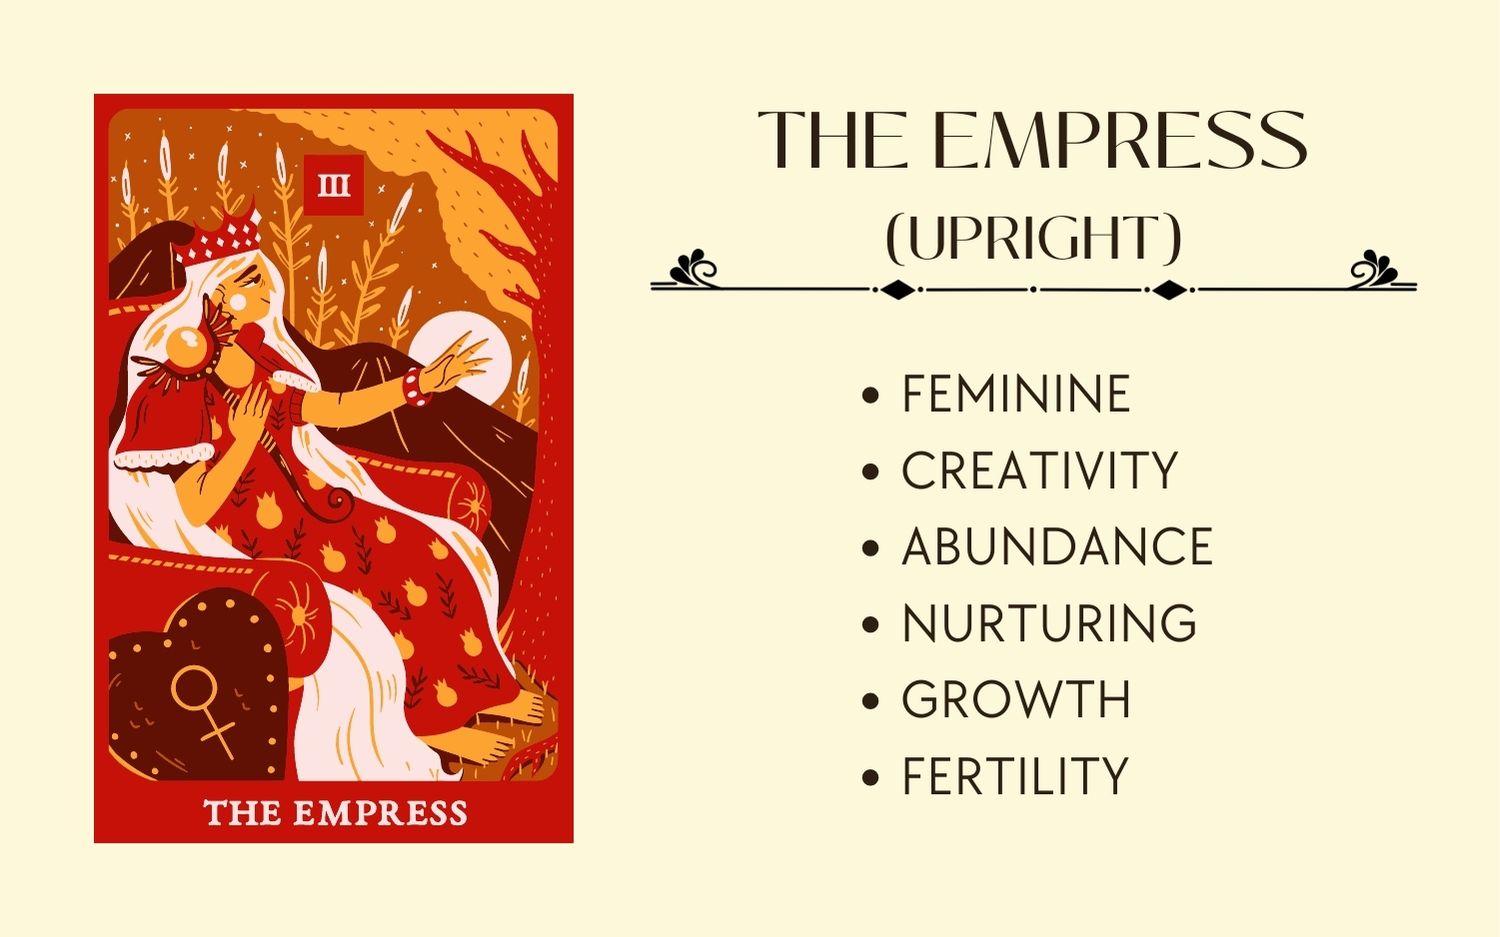 The Empress Upright Keywords